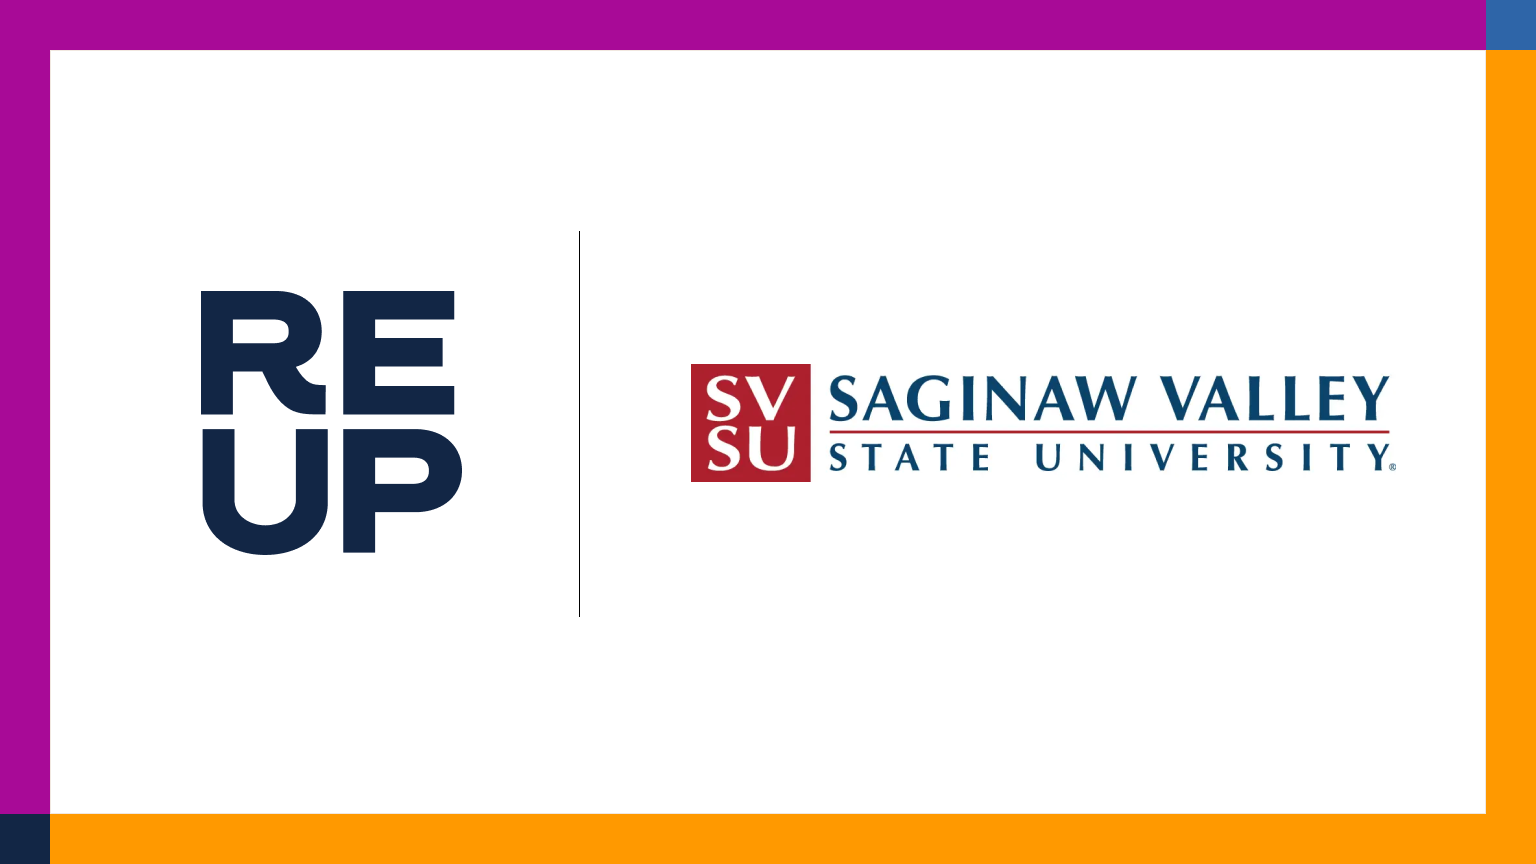 ReUp Education Saginaw Valley State University partnership announcement